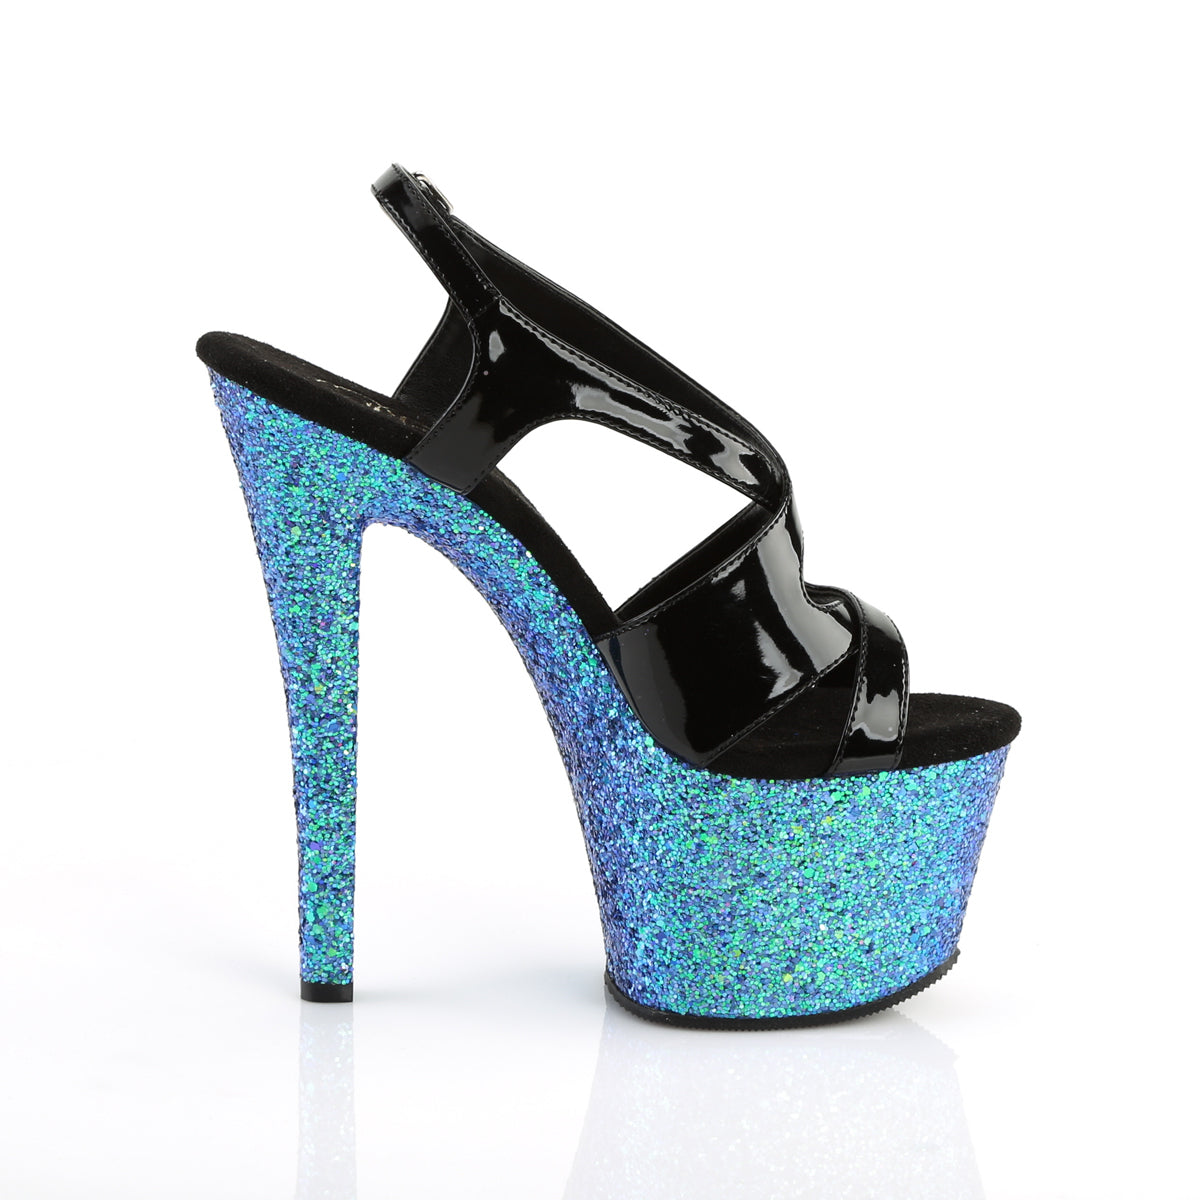 Pleaser Womens Sandals SKY-330LG Blk Pat/Blue Multi Glitter